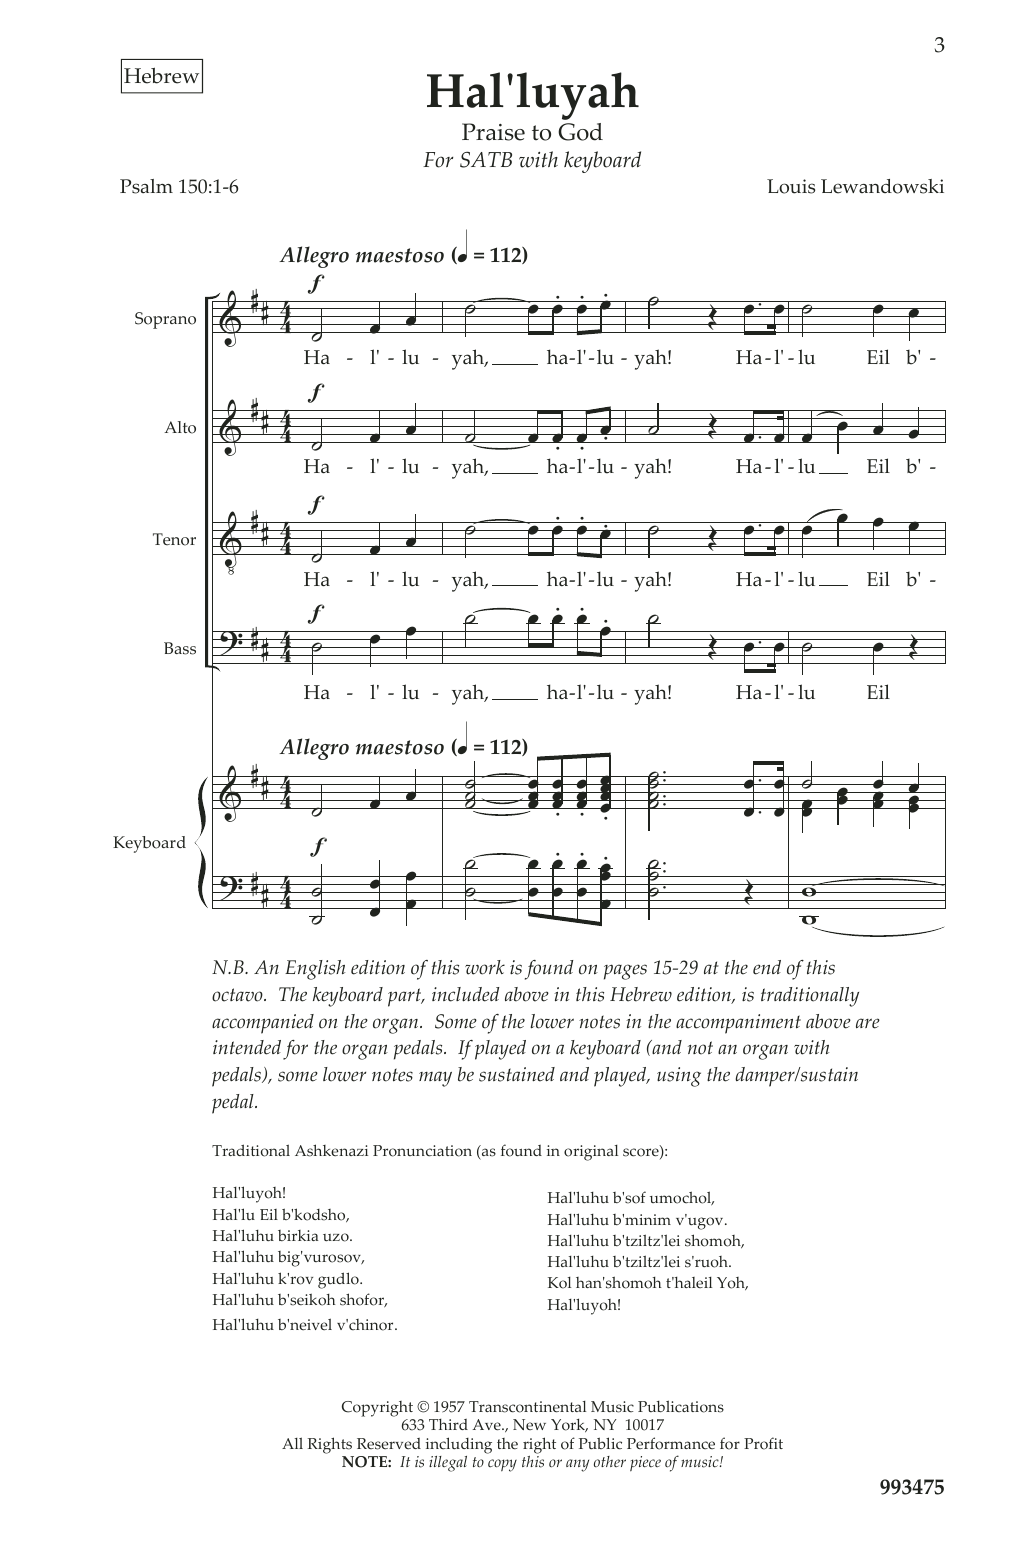 Download Louis Lewandowski Hal Luyah Sheet Music and learn how to play SATB Choir PDF digital score in minutes